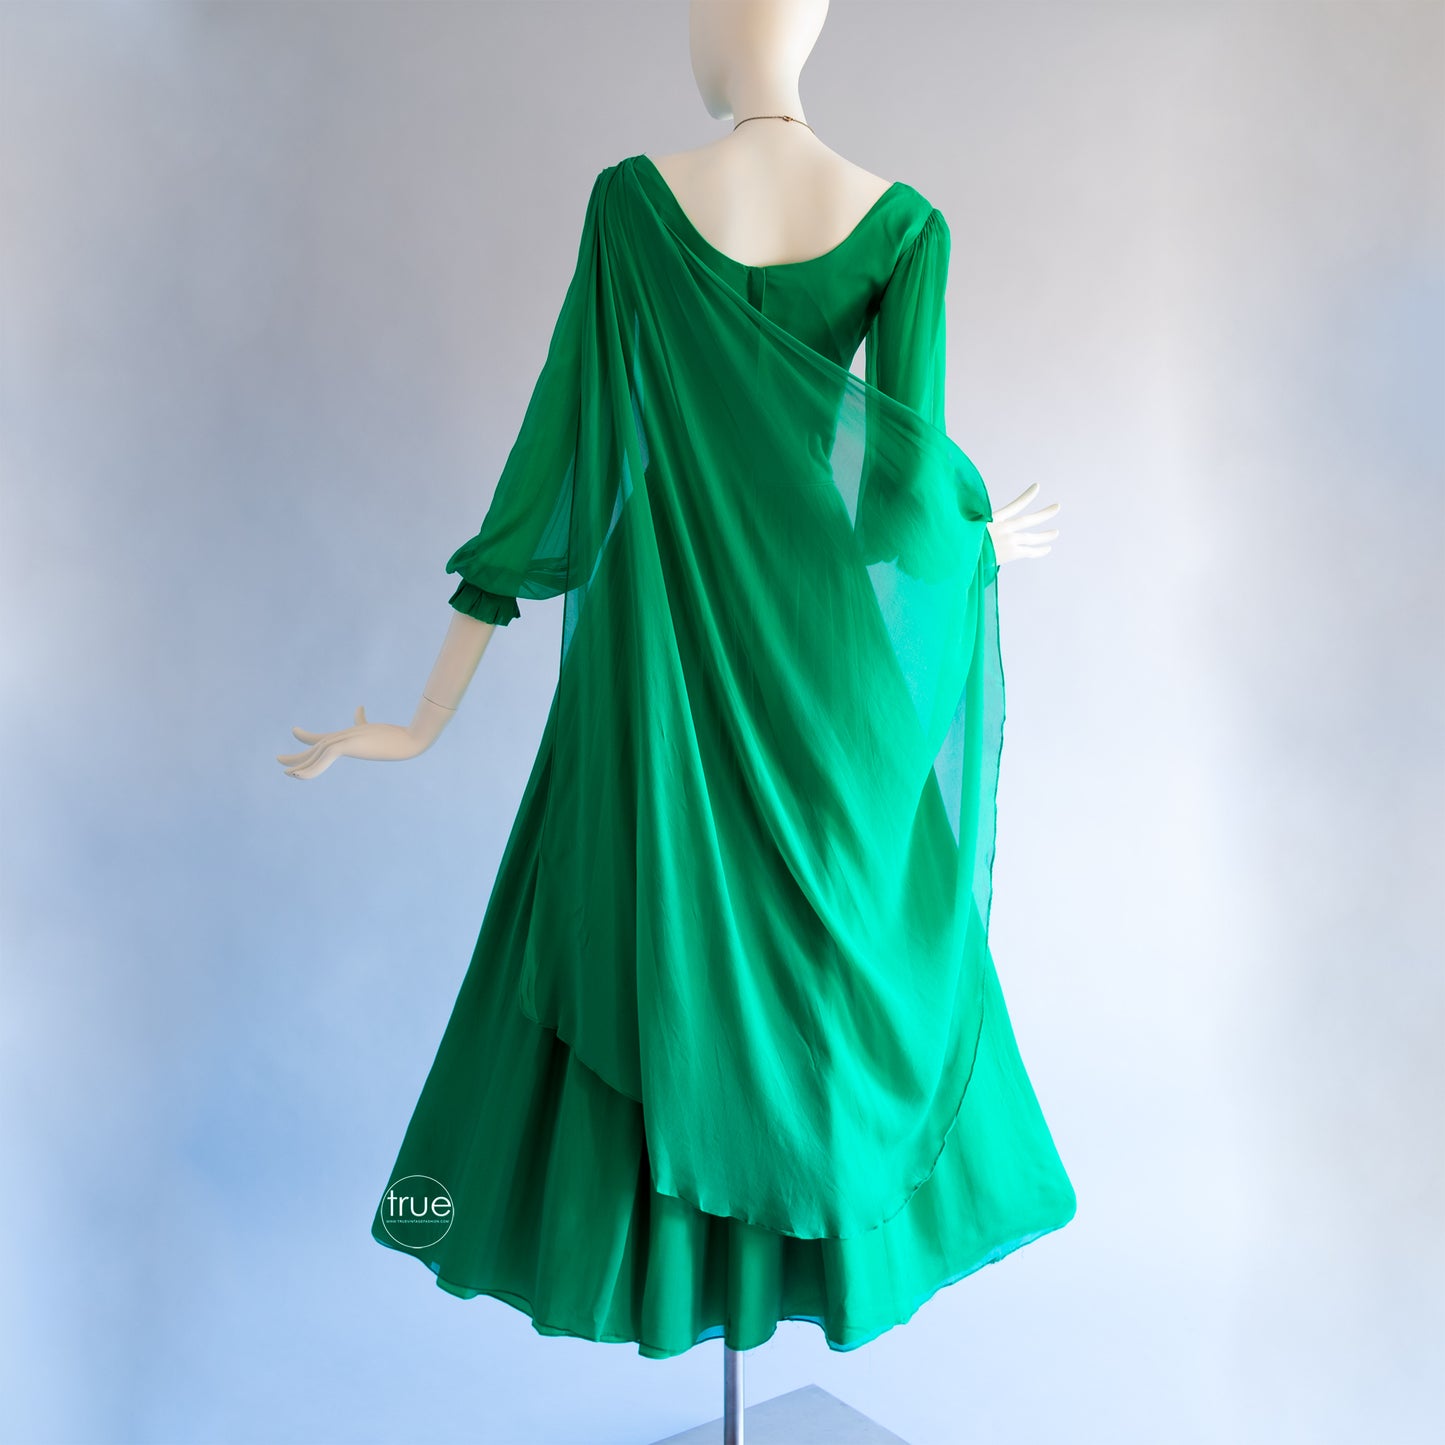 vintage 1960's dress ...ethereal emerald chiffon goddess dress with shoulder shash